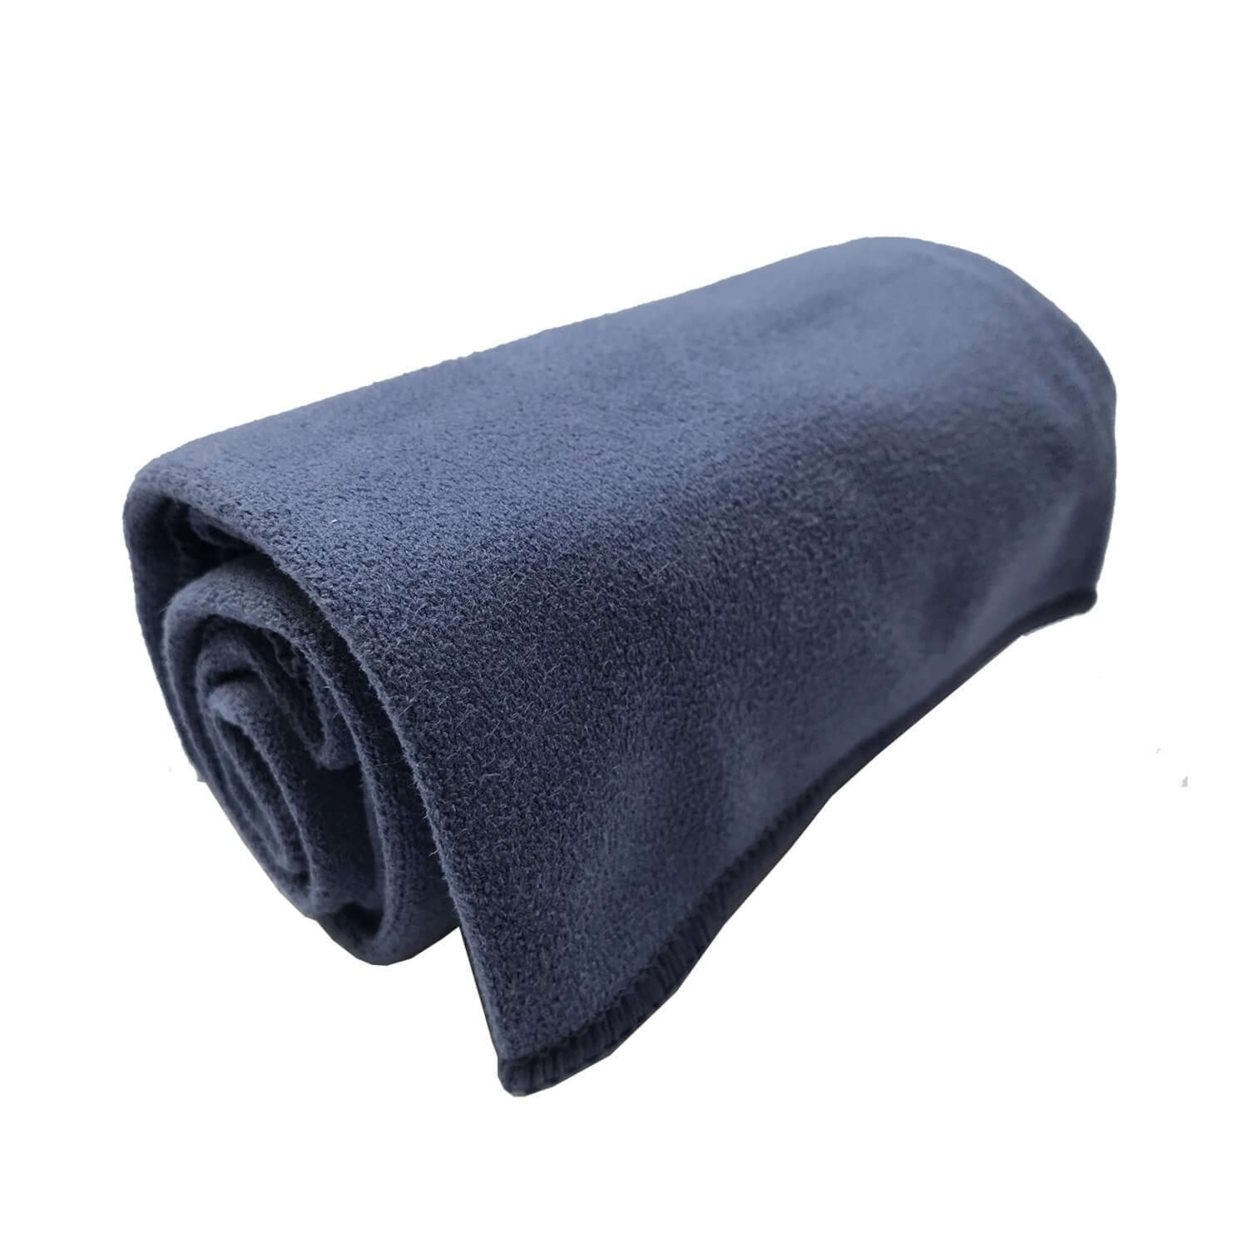 Premium Absorption Microfiber Hot Yoga Hand Towel - Lavender